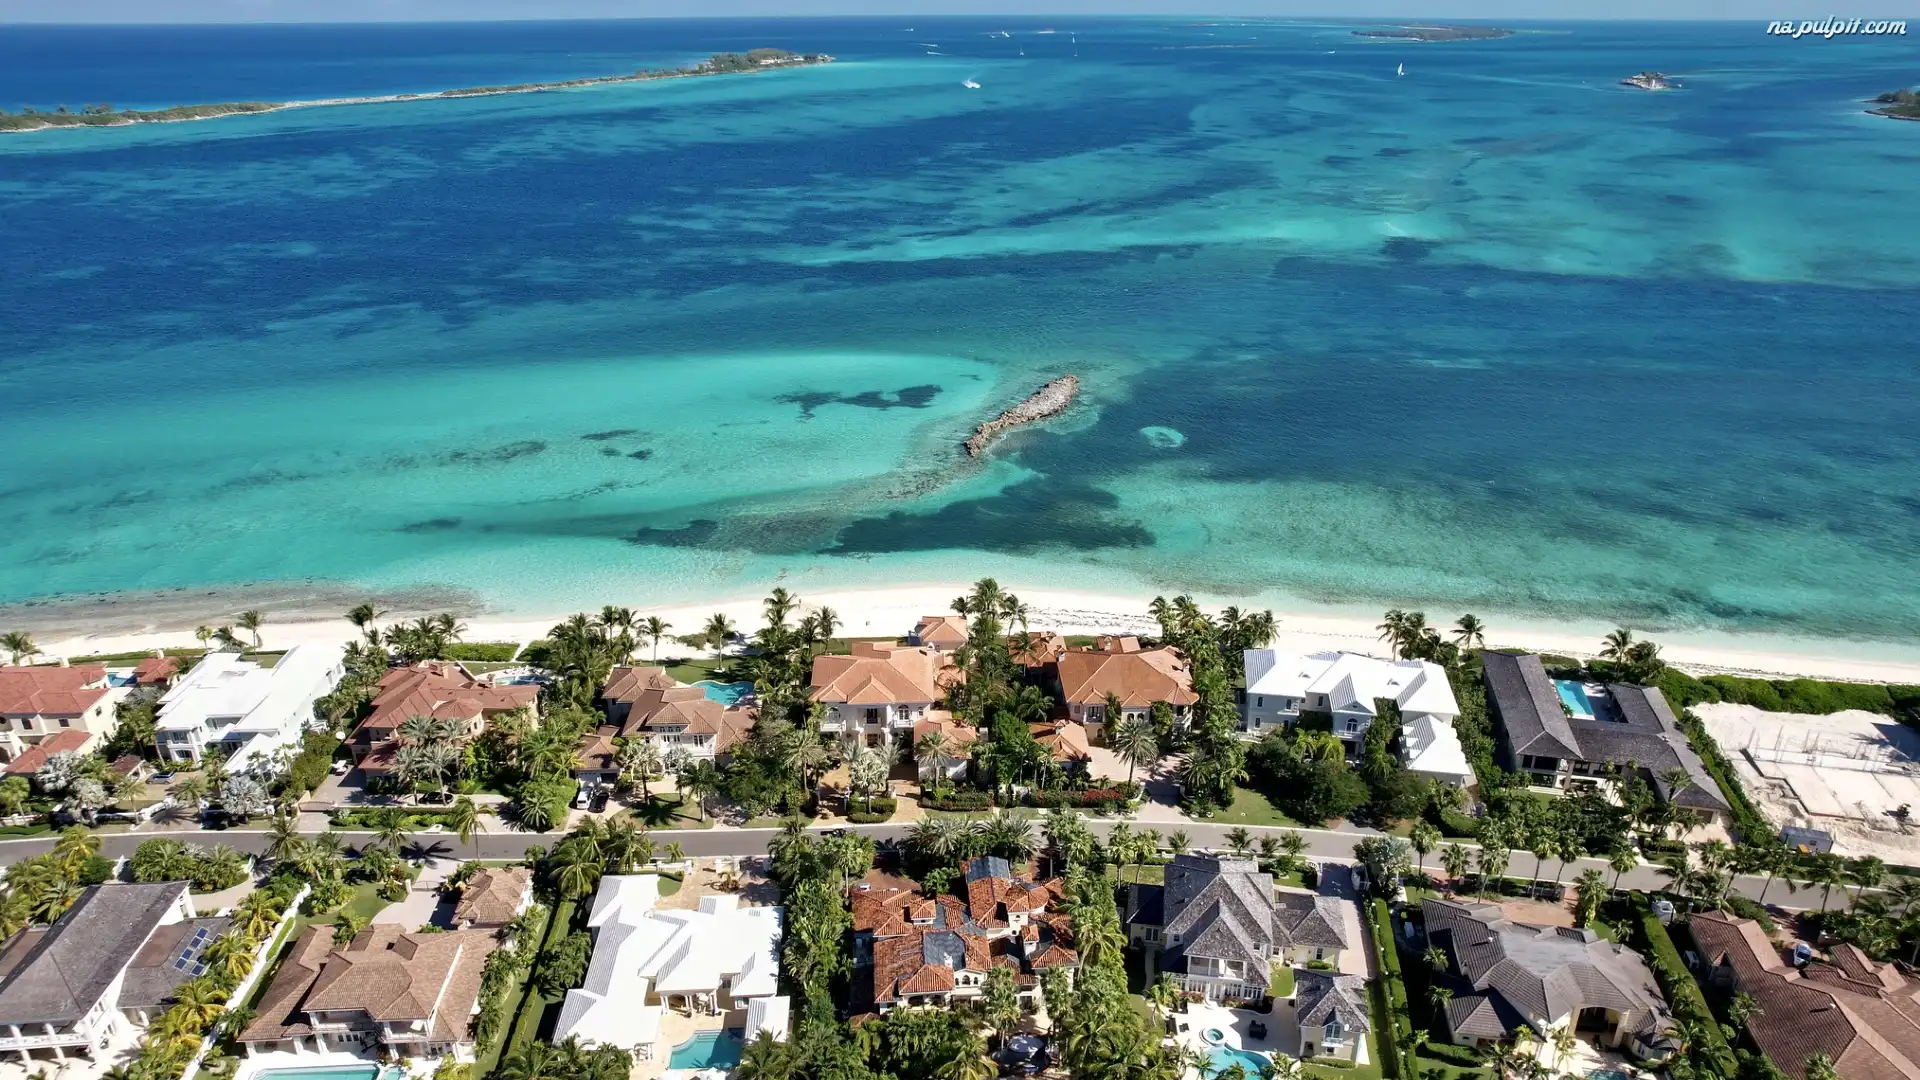 Bahamy, Nassau, Ocean Atlantycki, Domy, Creek Village, Morze, Wyspa New Providence